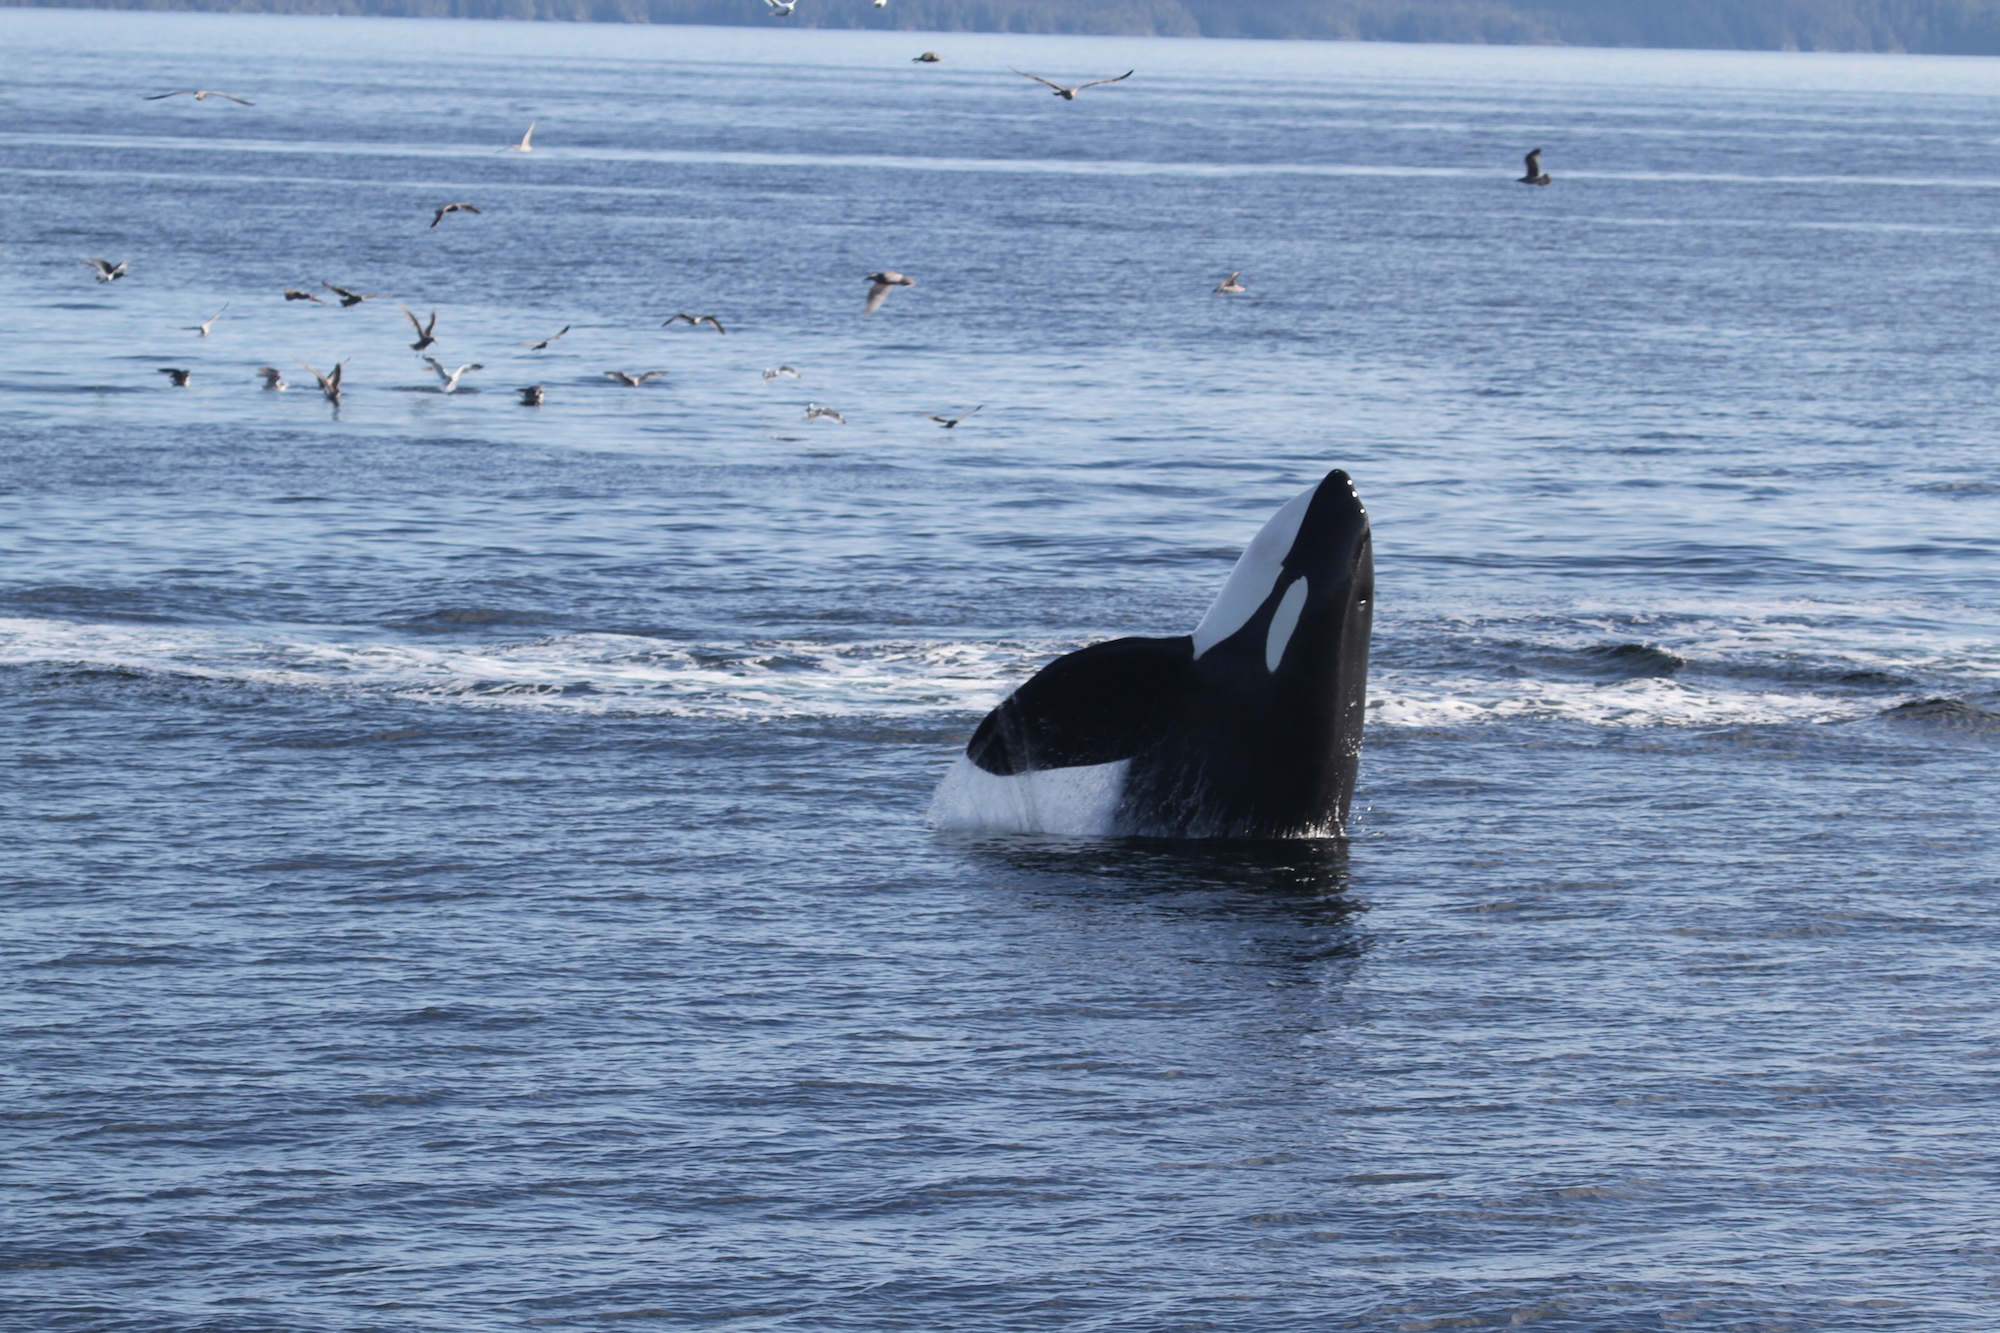 Orca whale in the Salish Sea